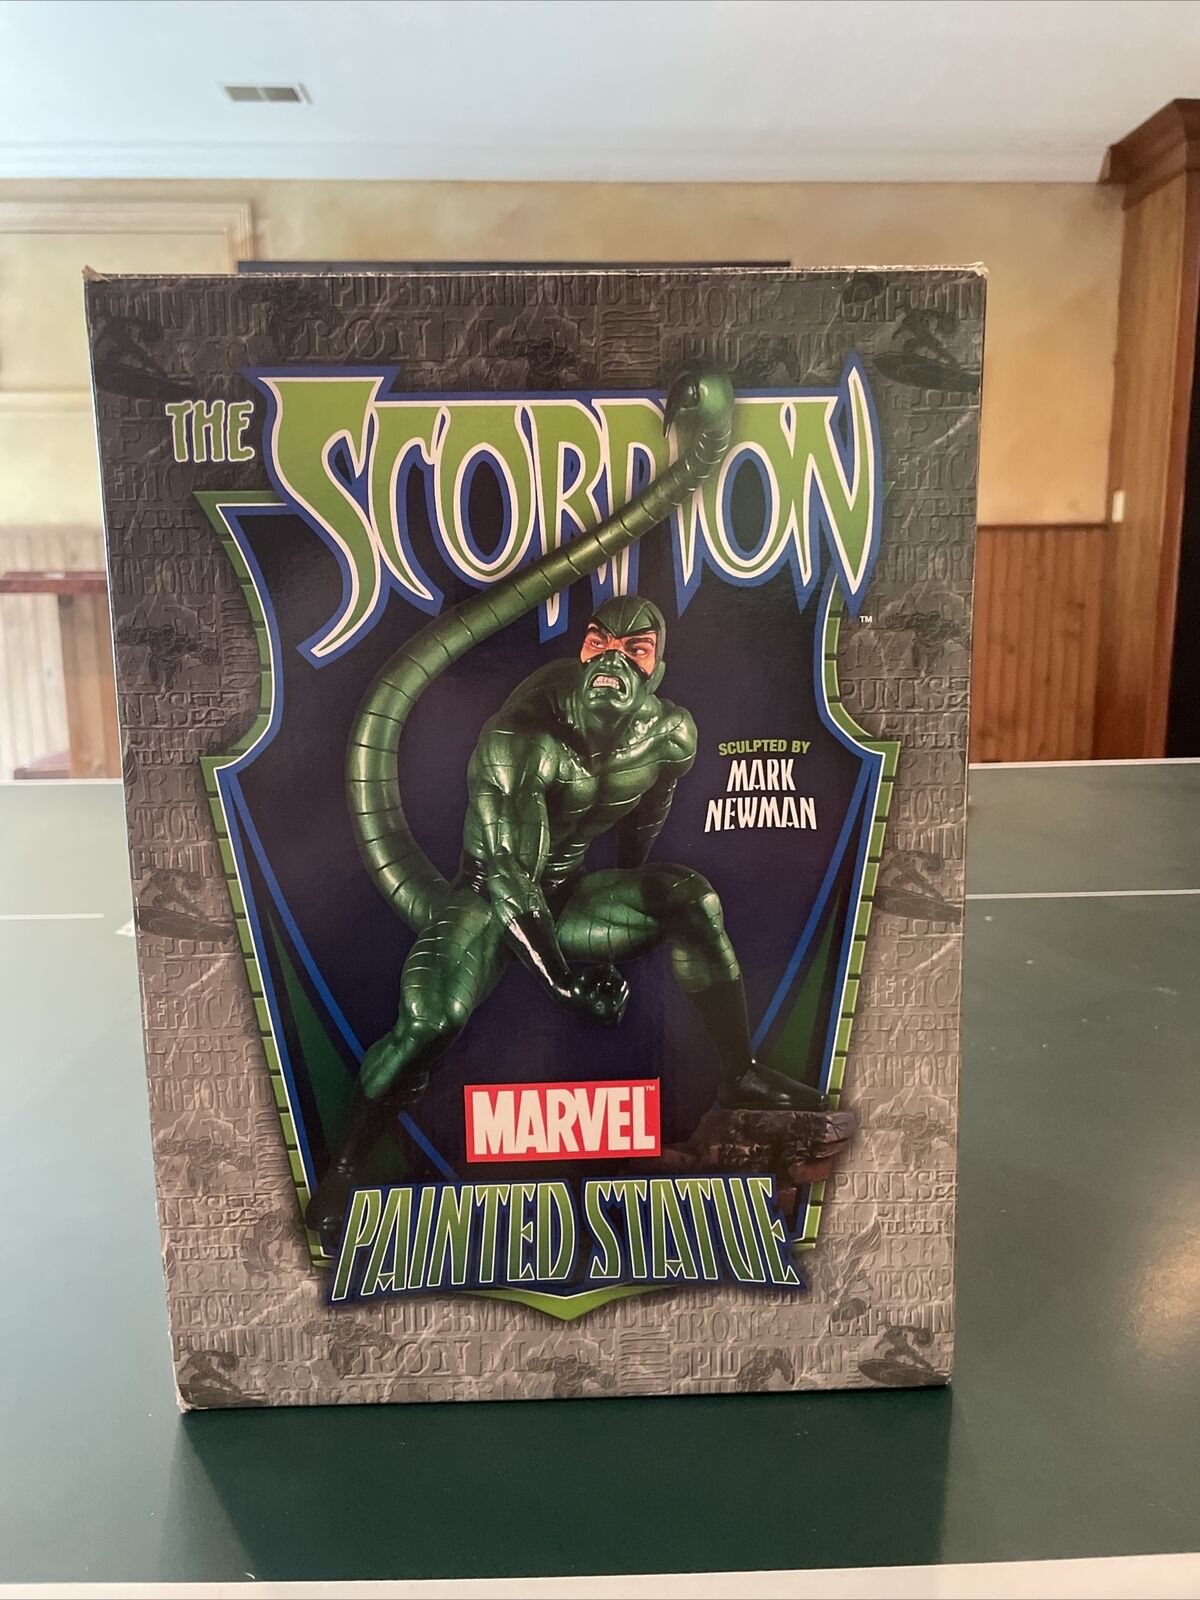 Marvel Bowen Scorpion Limited Edition Statue 0654/1000